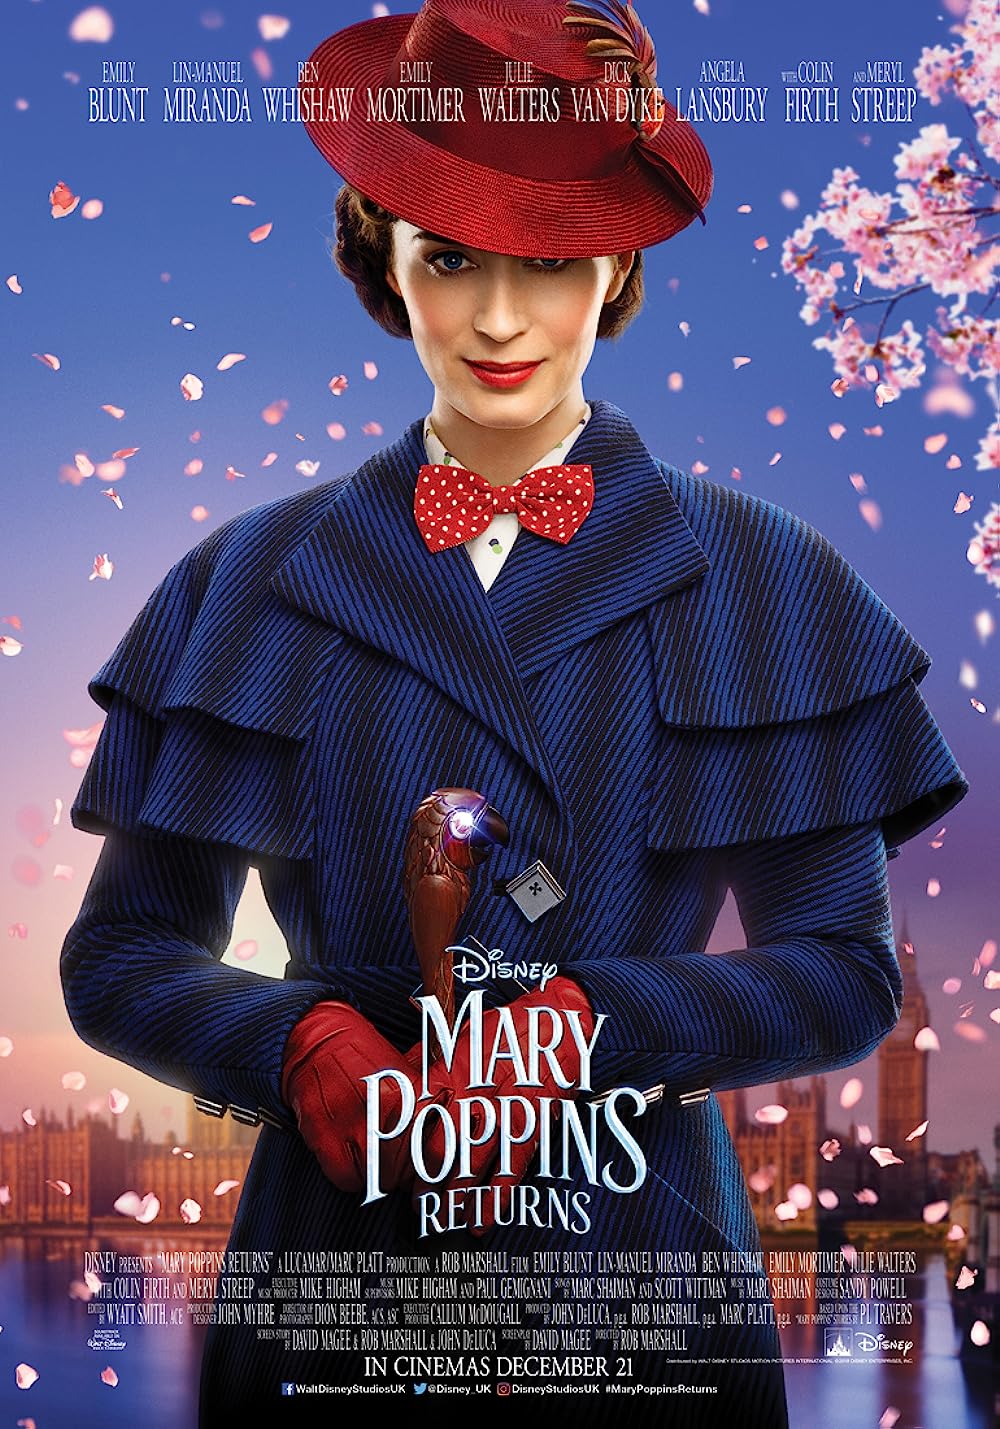 A Timeless Classic: บทวิจารณ์ภาพยนตร์ของ Mary Poppins